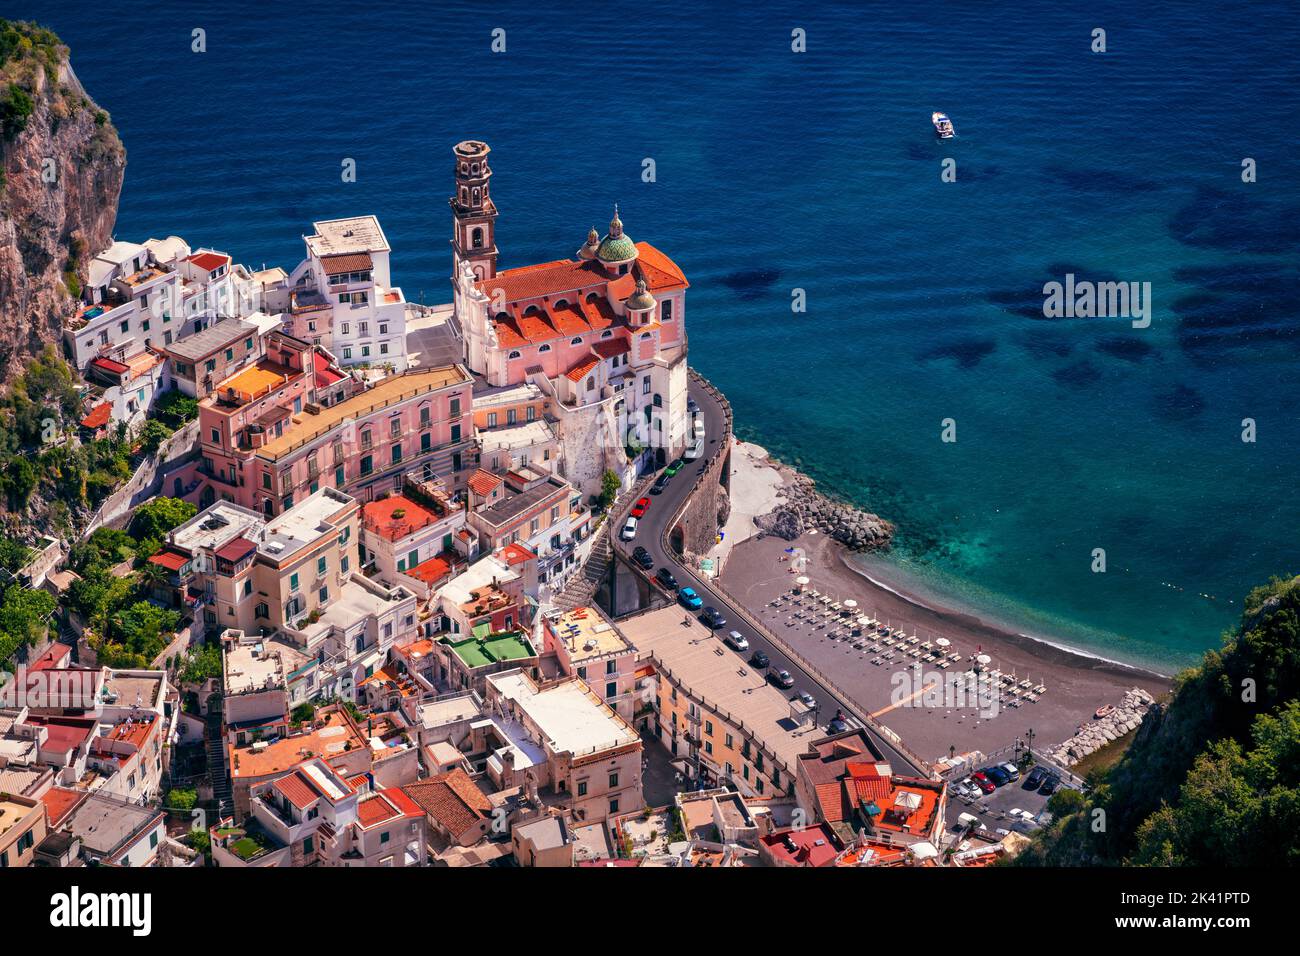 Atrani, Amalfi Coast, Italy. Aerial cityscape image of famous city Atrani located on Amalfi Coast, Italy at sunny summer day. Stock Photo